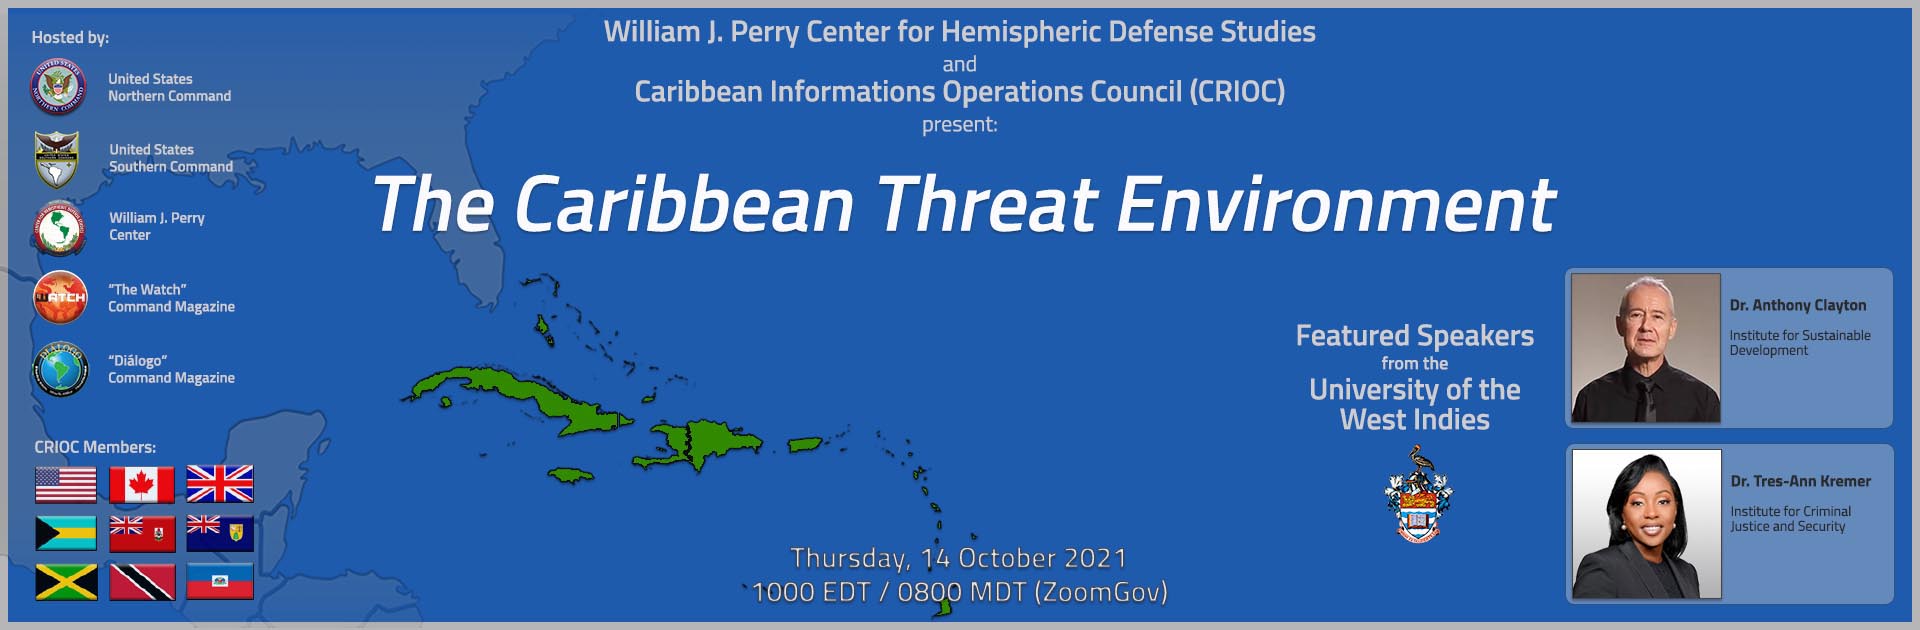 The Caribbean Threat Environment